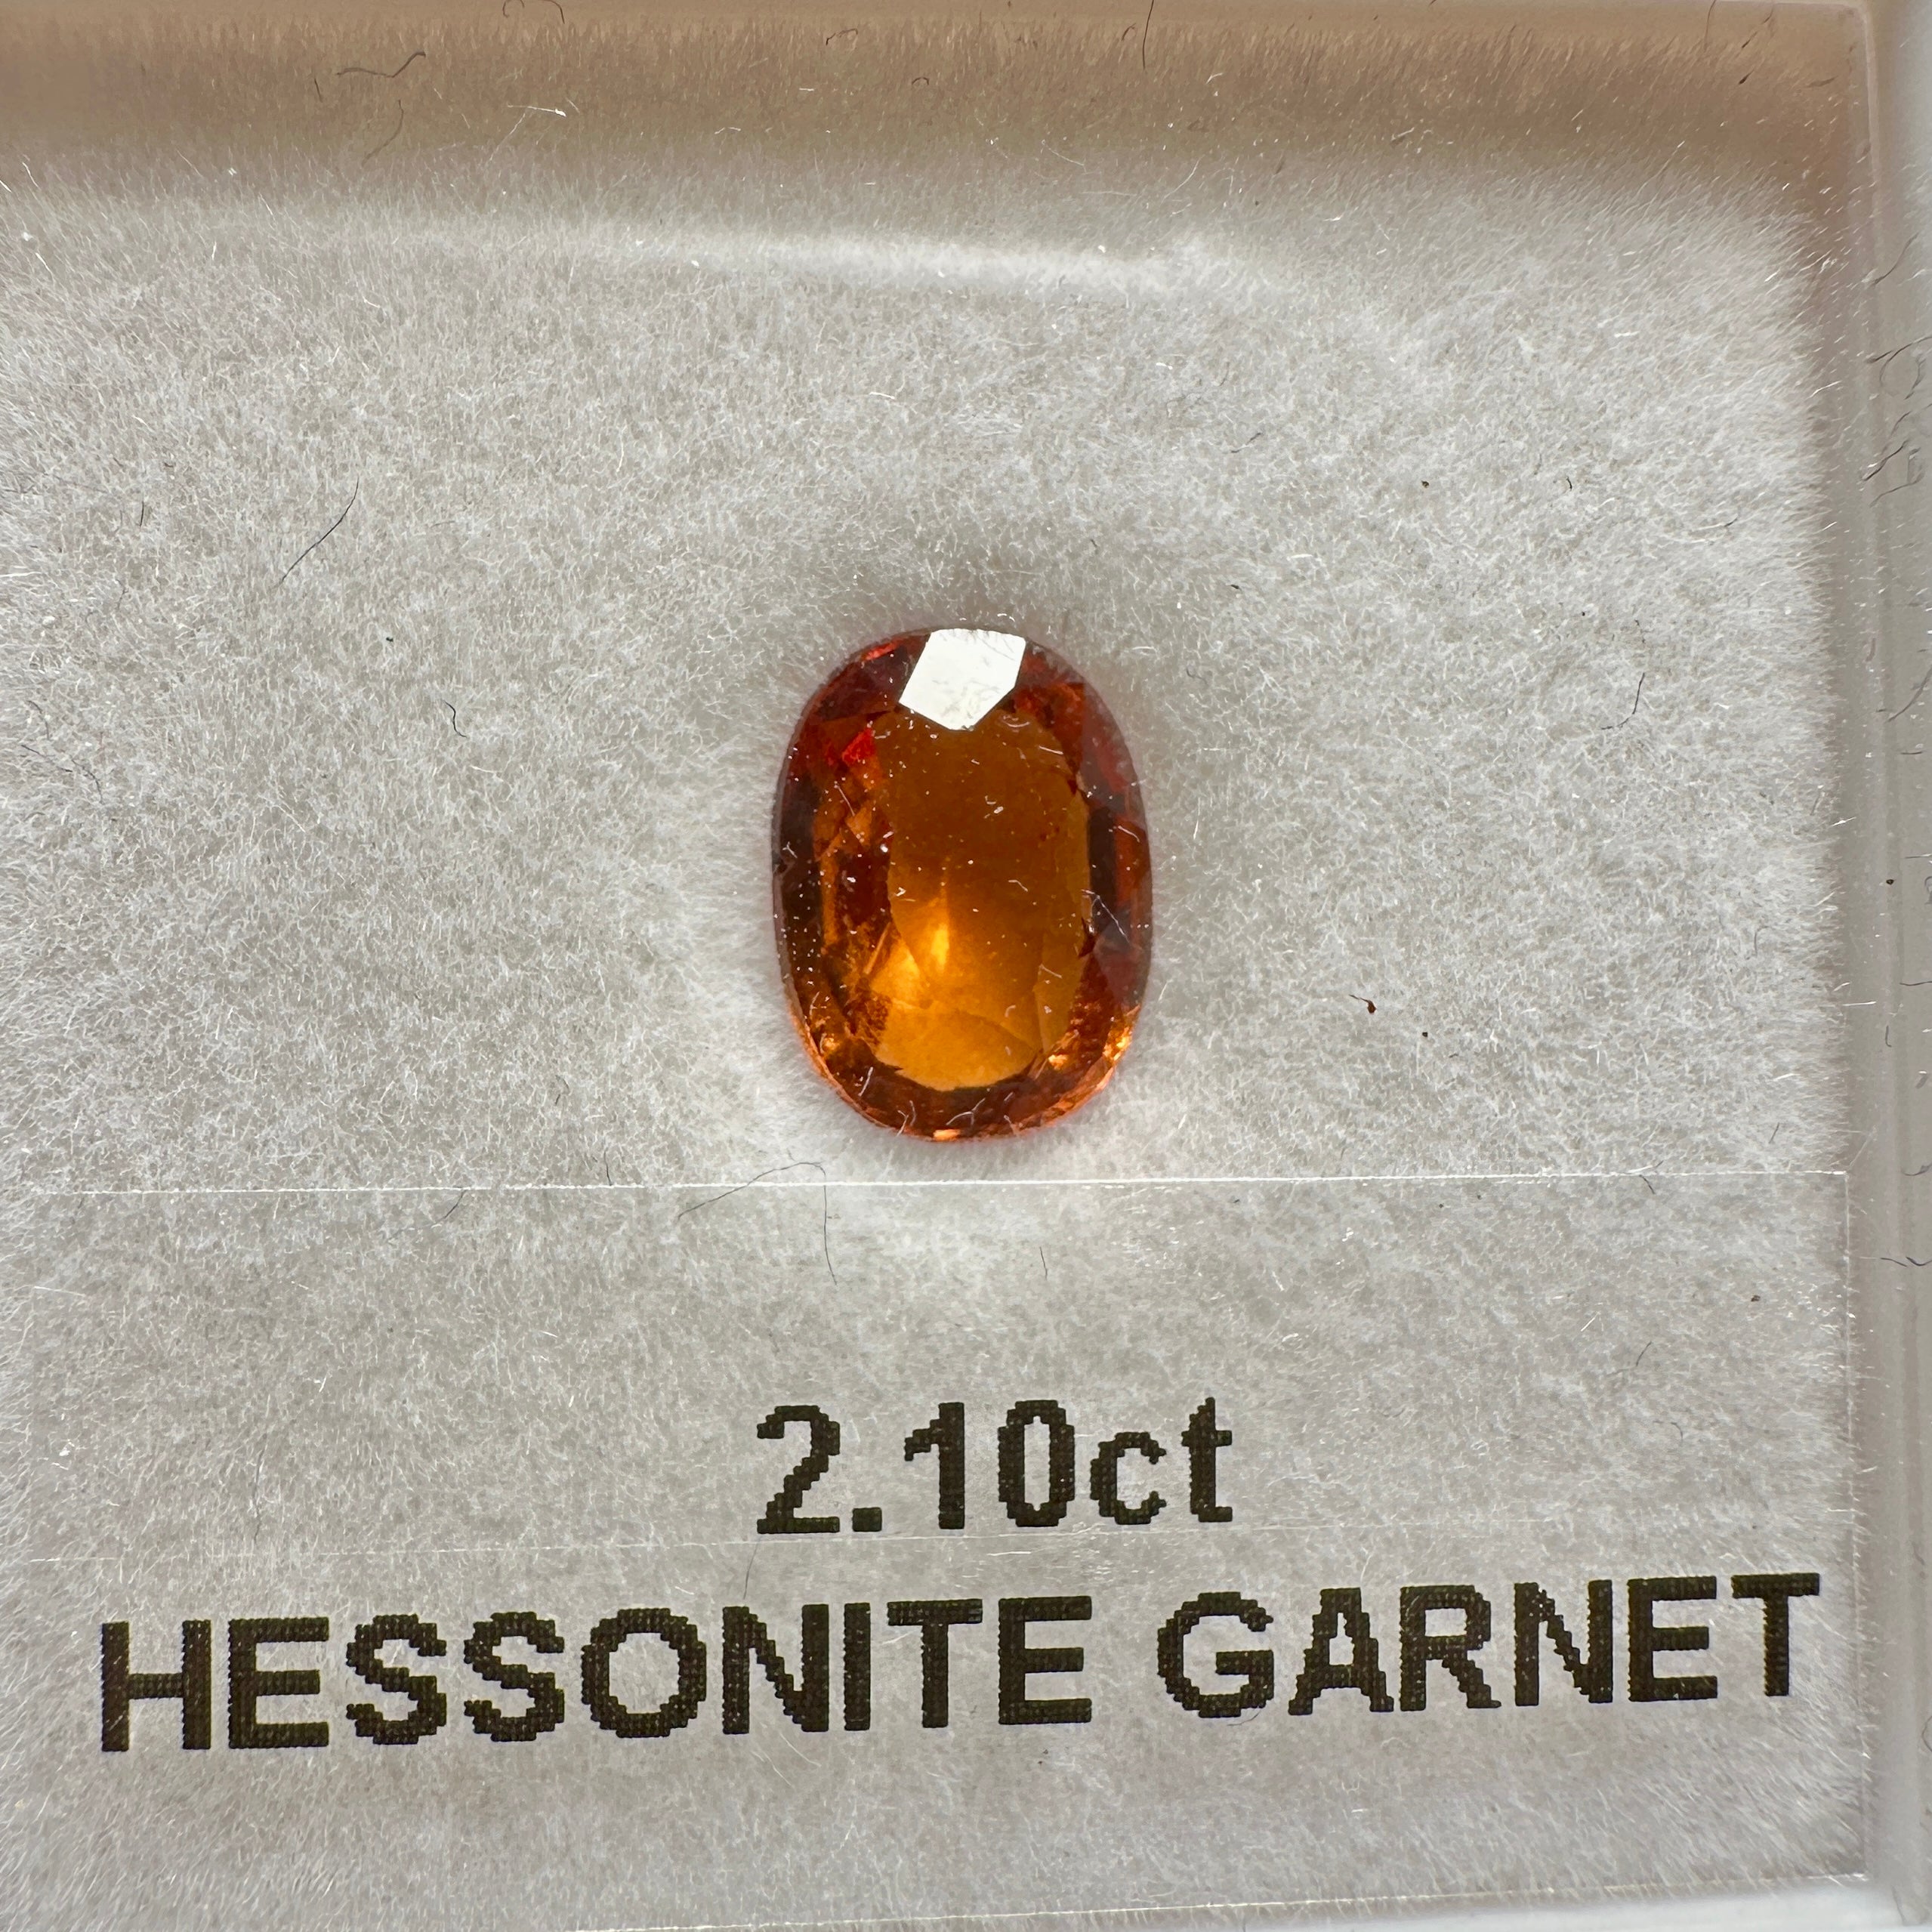 2.10ct Hessonite Garnet, Untreated Unheated, native cut